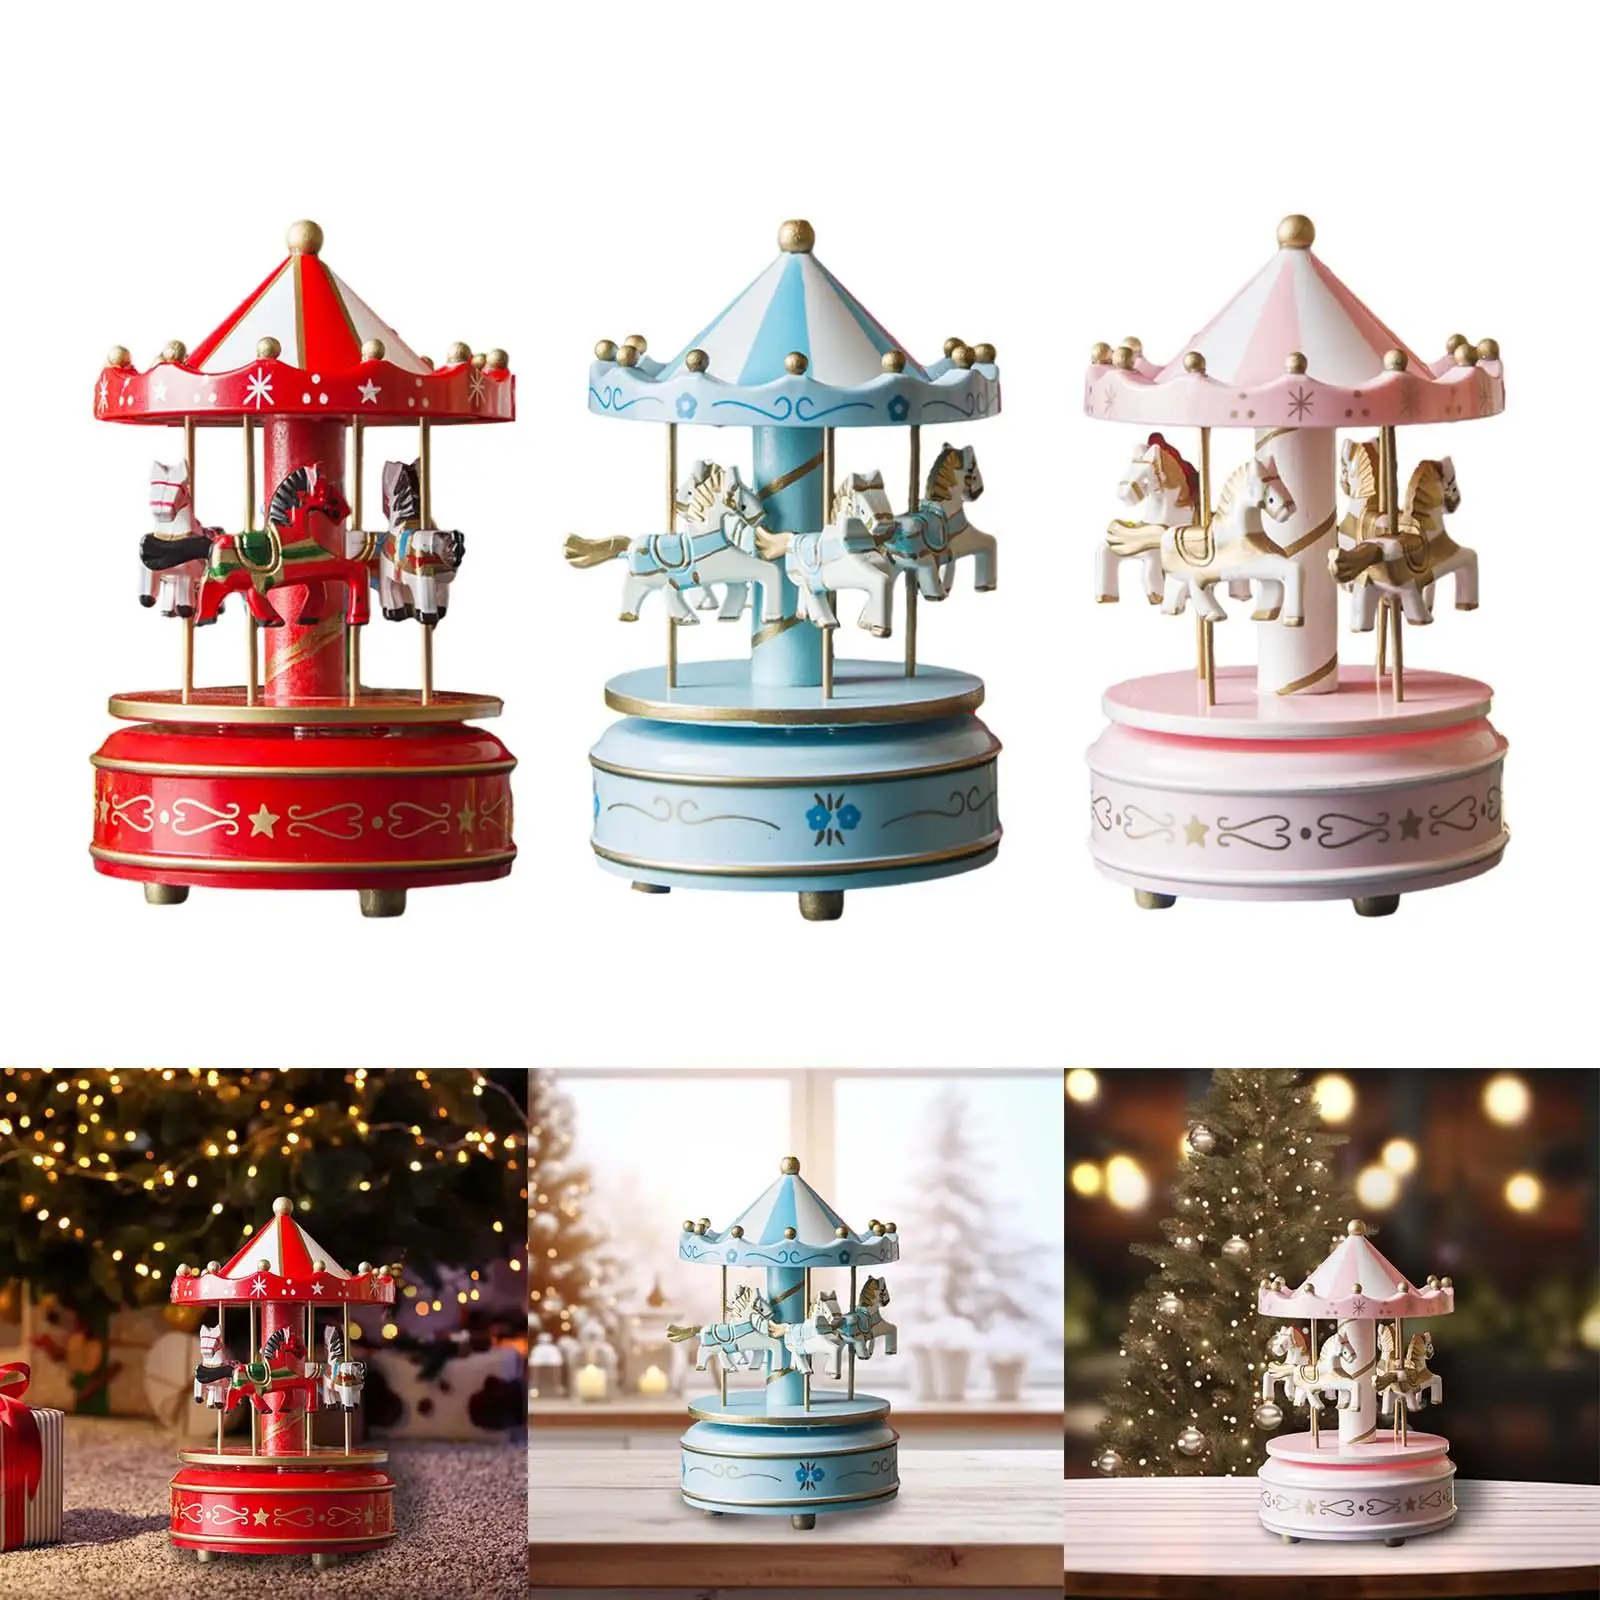 Wood Musical Box Christmas Crafts Decoration Xmas Showpiece Decorative Turn Horse Shaped for Valentine Gift